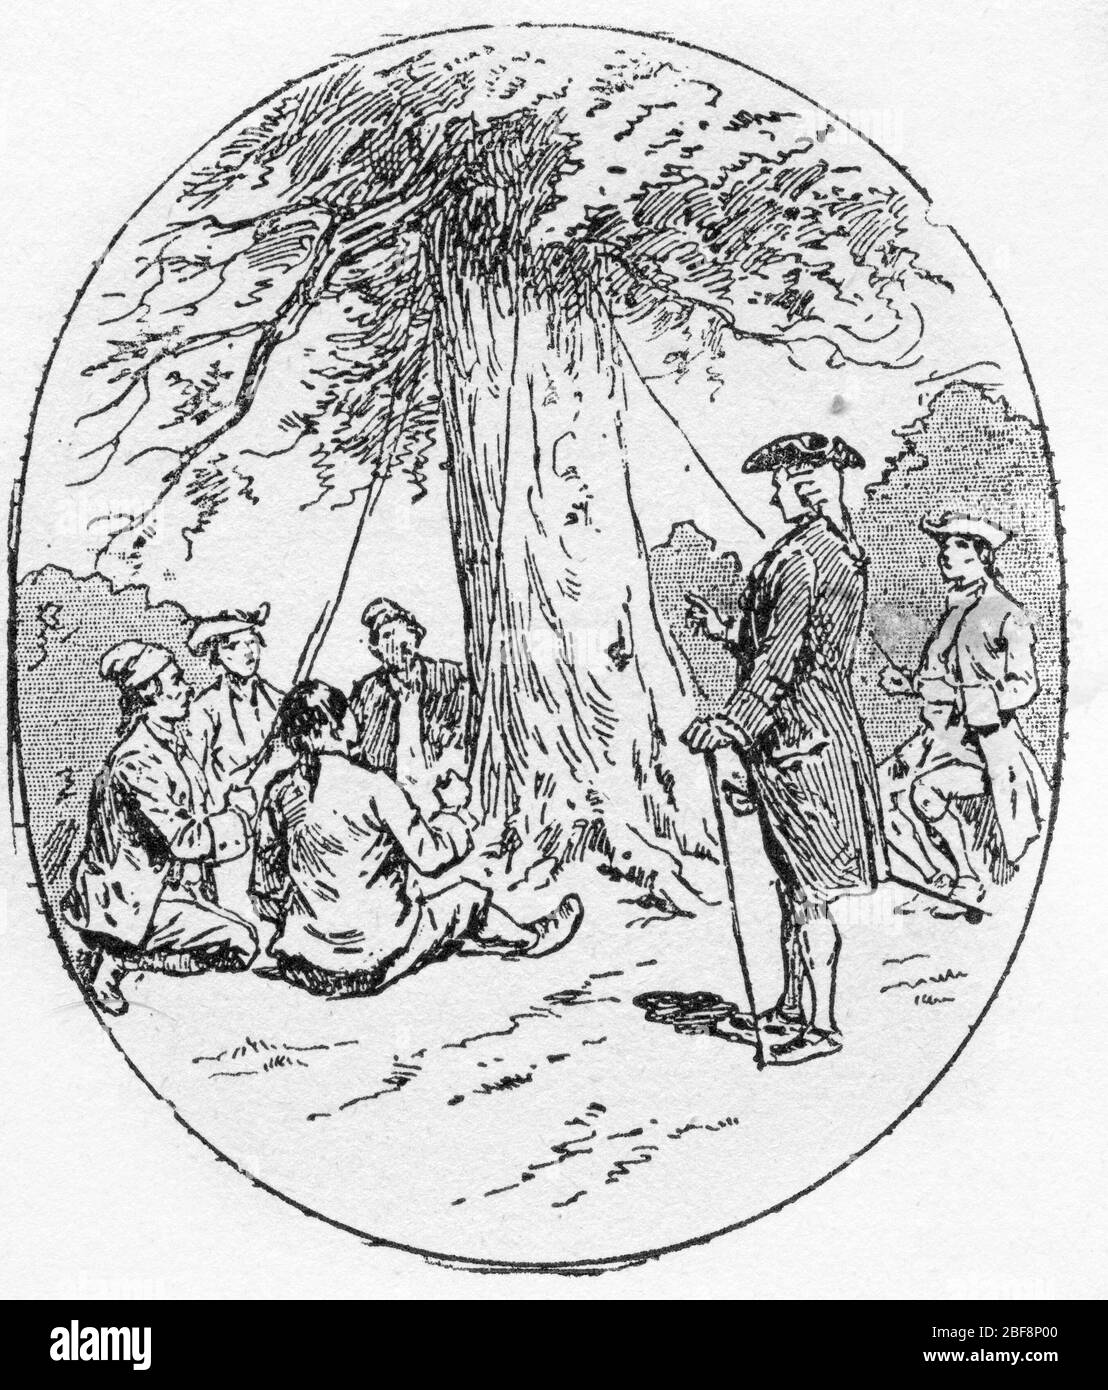 Mesmerisme : arbre utilizzare a la Place du baquet par Franz-Anton mesmer (1734-1815) fin 18eme siecle (Mesmerismo : un albero usato come un baquet da Franz Anto Foto Stock